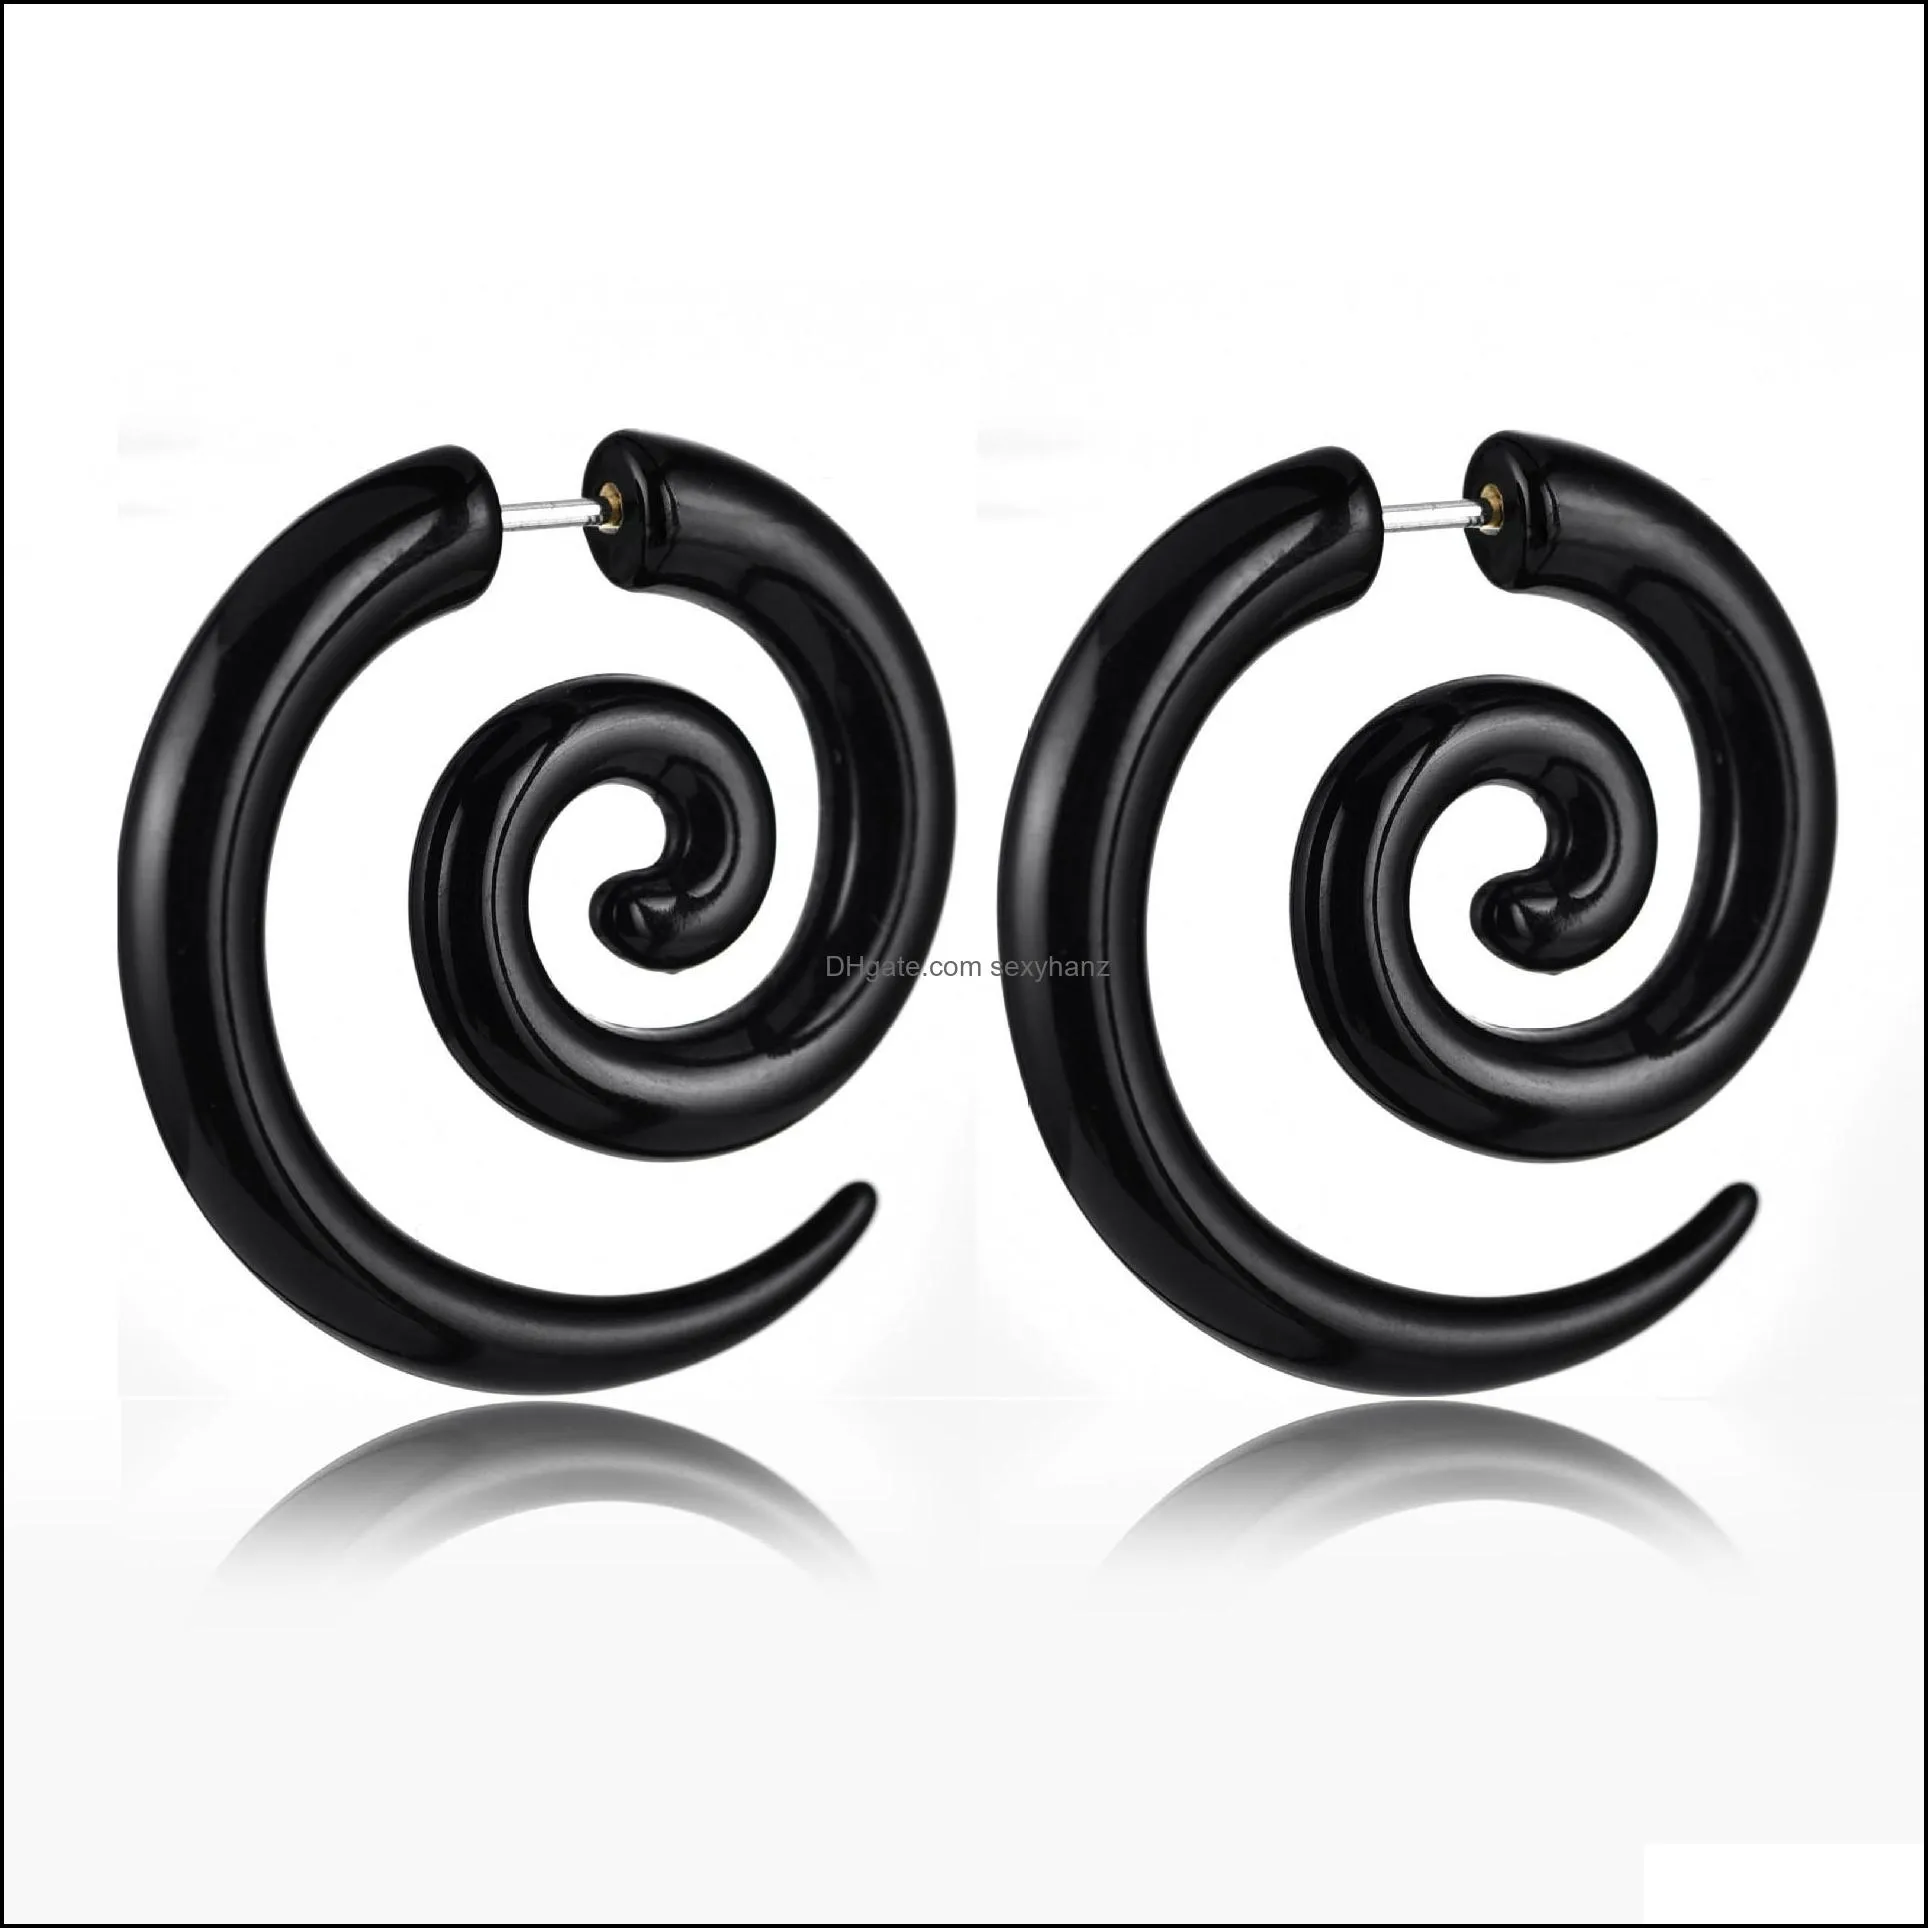 punk tribal spiral fake gauges acrylic ear tapers fake plugs horn stud earrings wing faux fake plugs piercings body